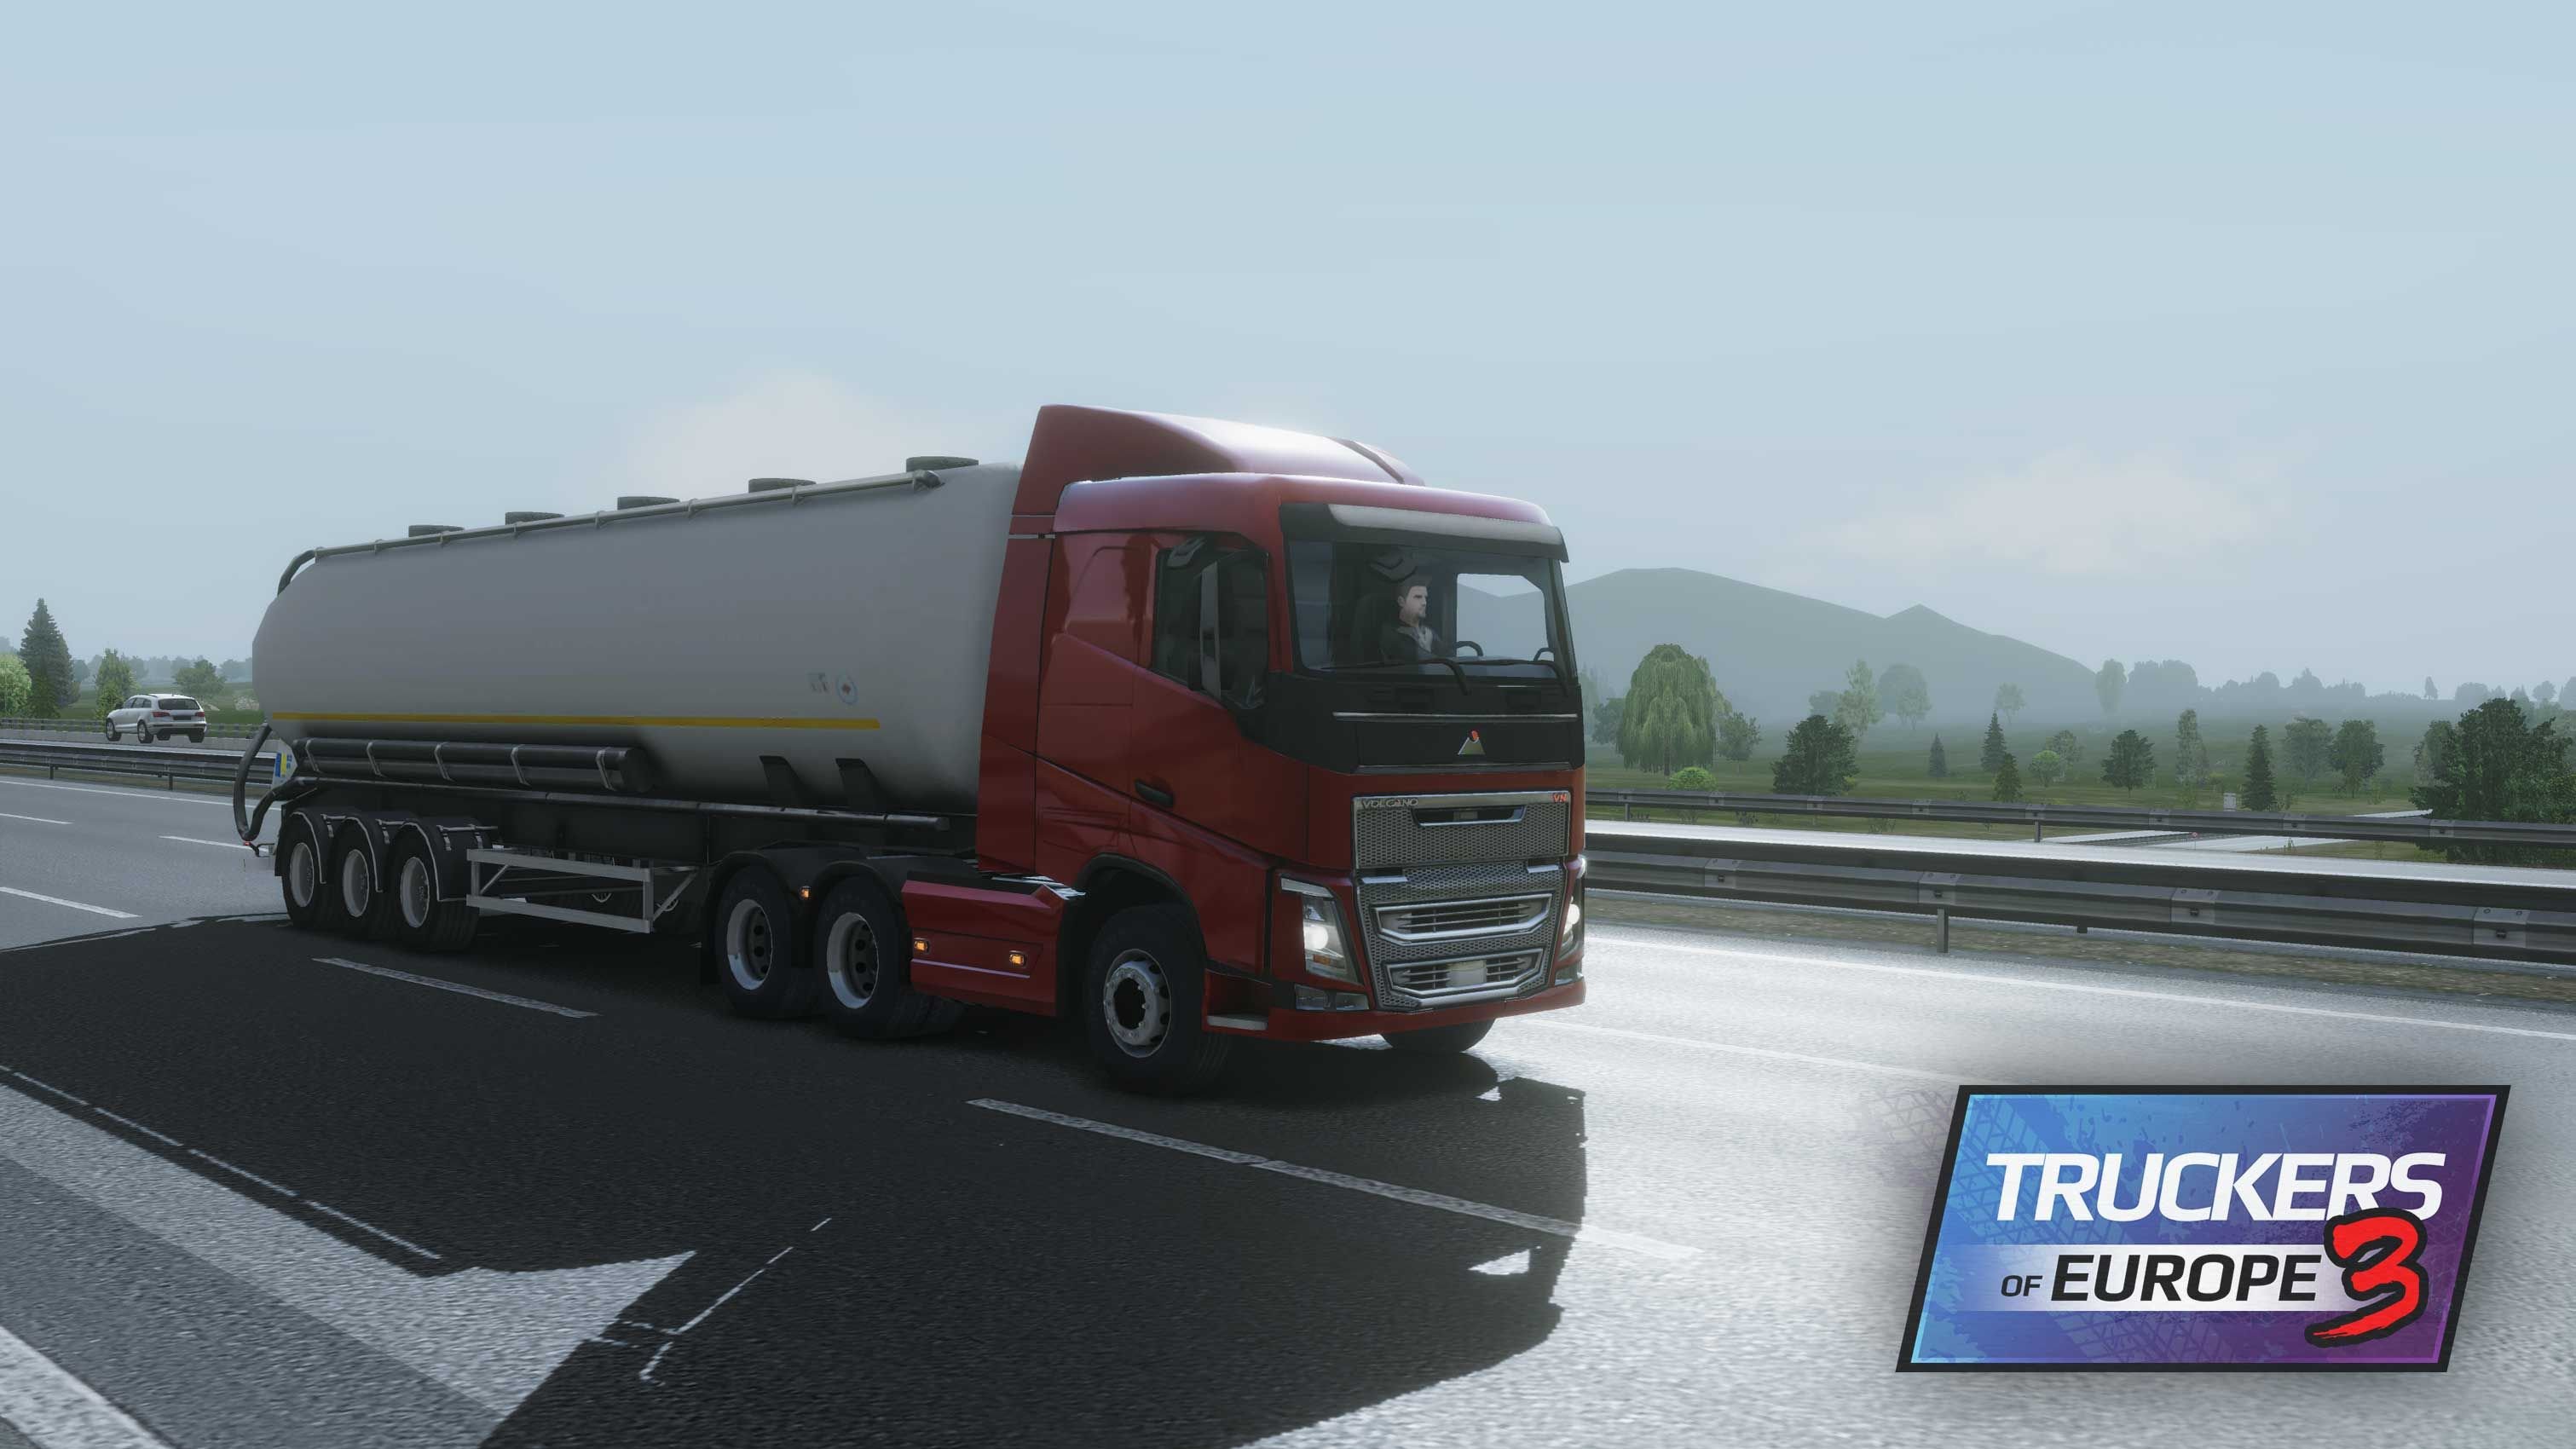 Игры тракерс оф европа 3. Truck of Europe 3. Trucker of Europe 3 русская версия. Truck Simulator Europe 3. Truckers of Europe 3 0.45.